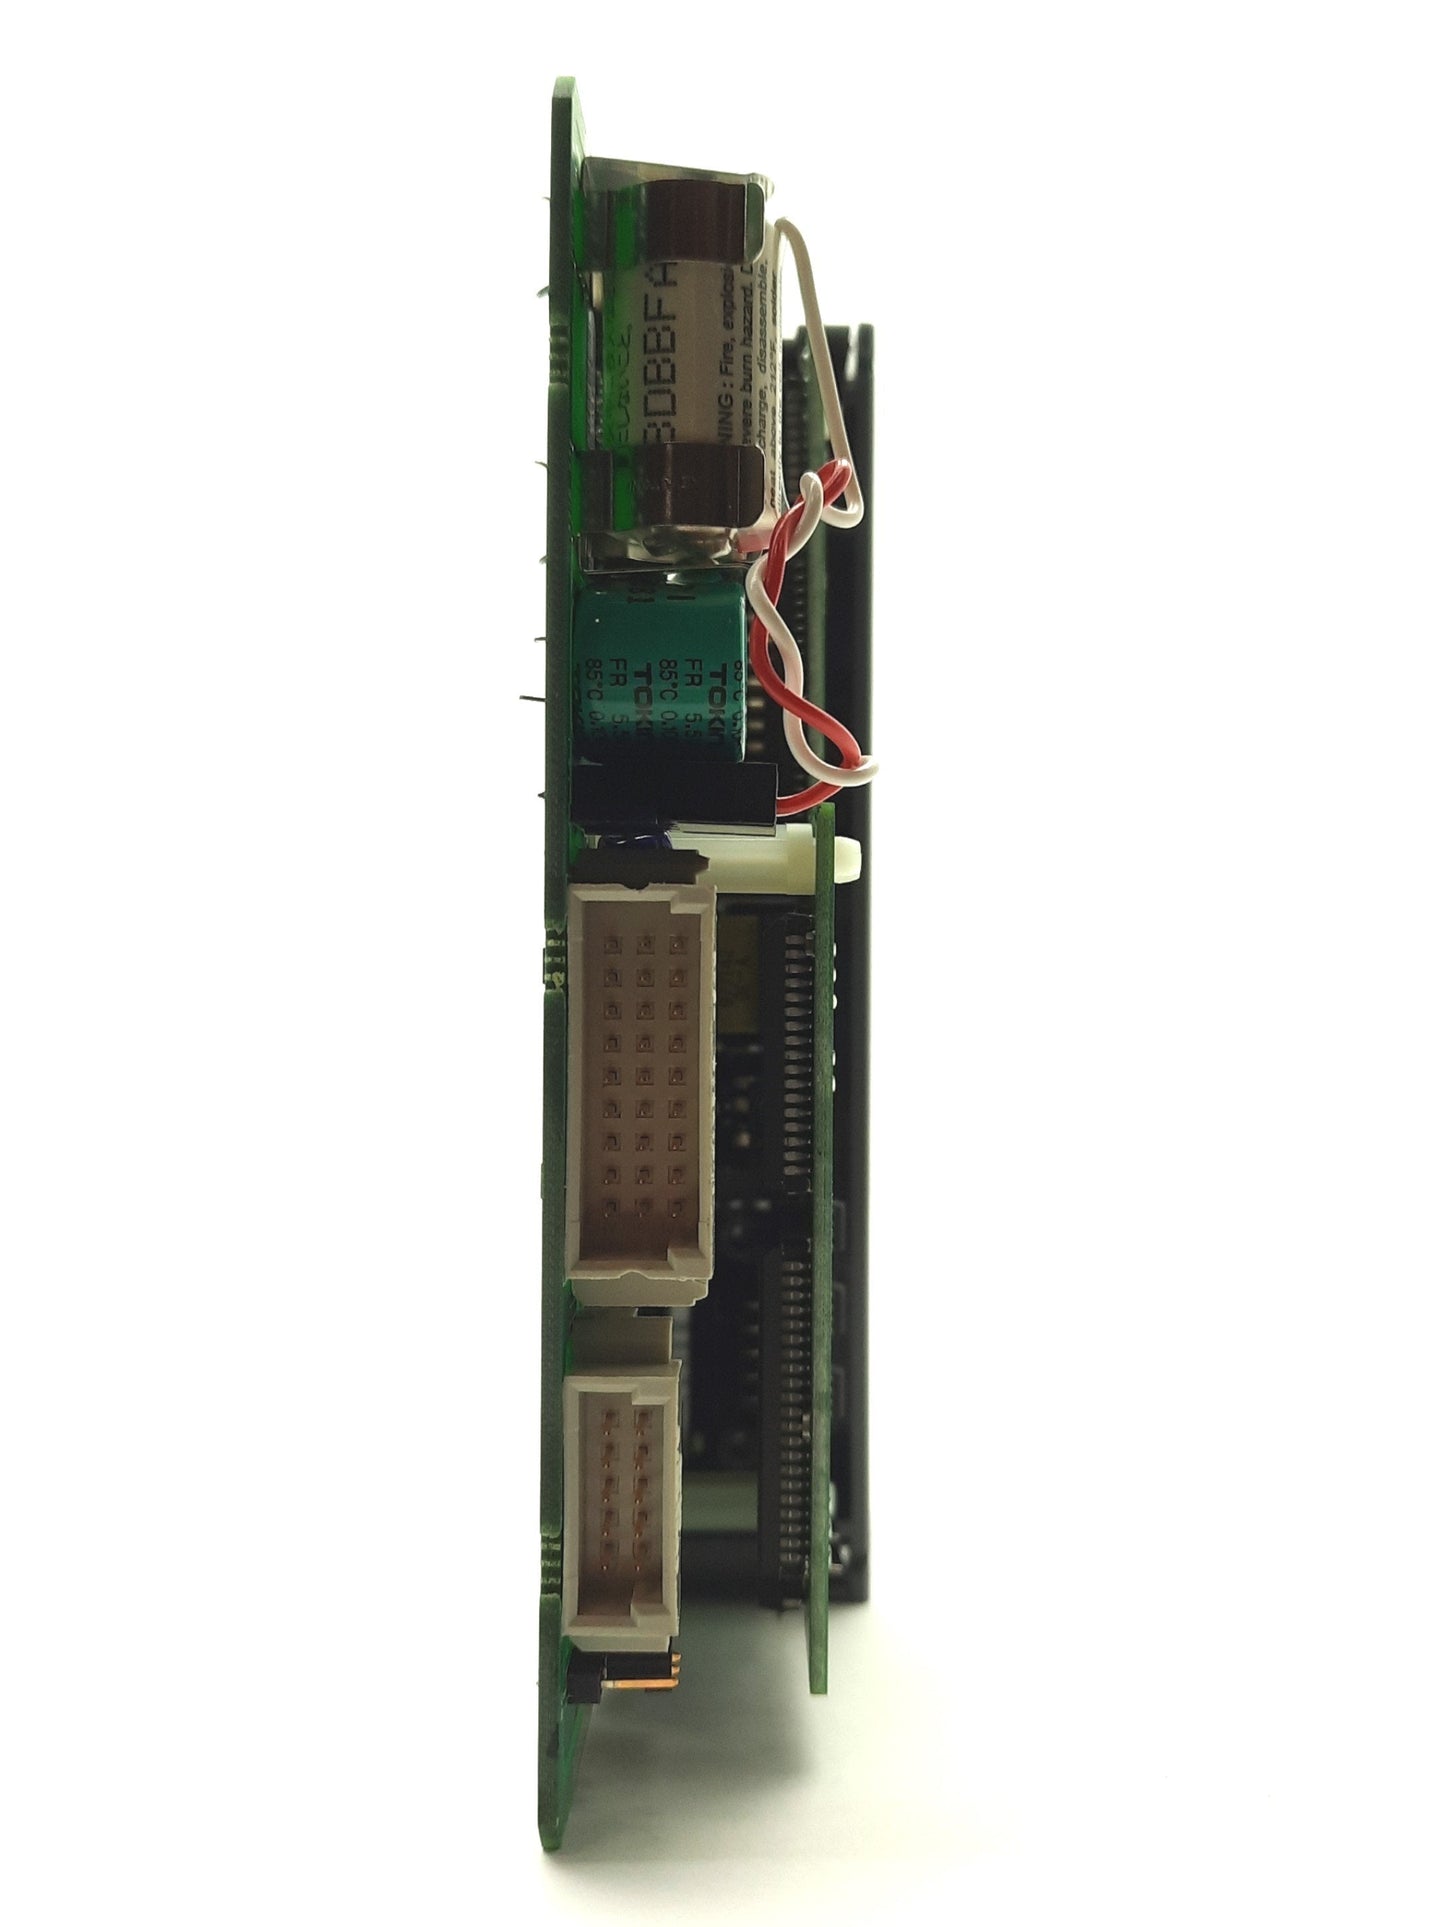 Allen Bradley 1747-L541 Ser C Rev 7 SLC 500 5/04 PLC CPU/Processor, RS-232